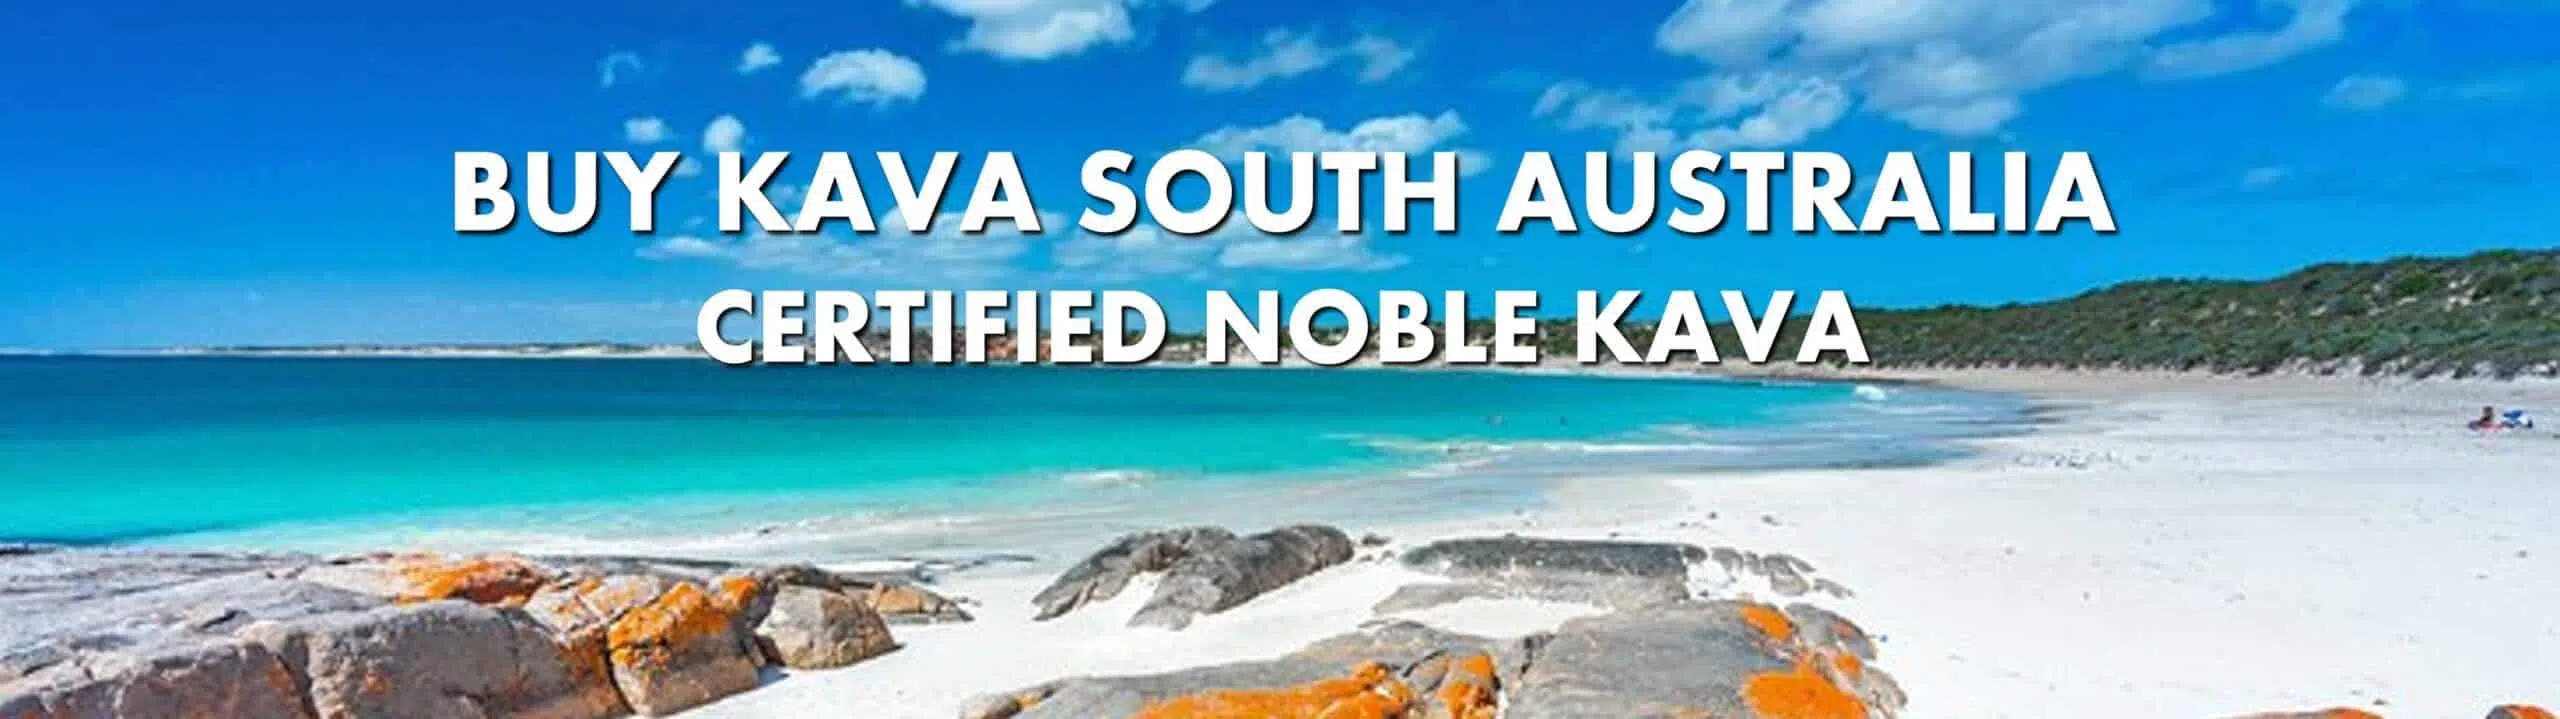 Beach scene with caption Buy Kava South Australia Certified Noble Kava